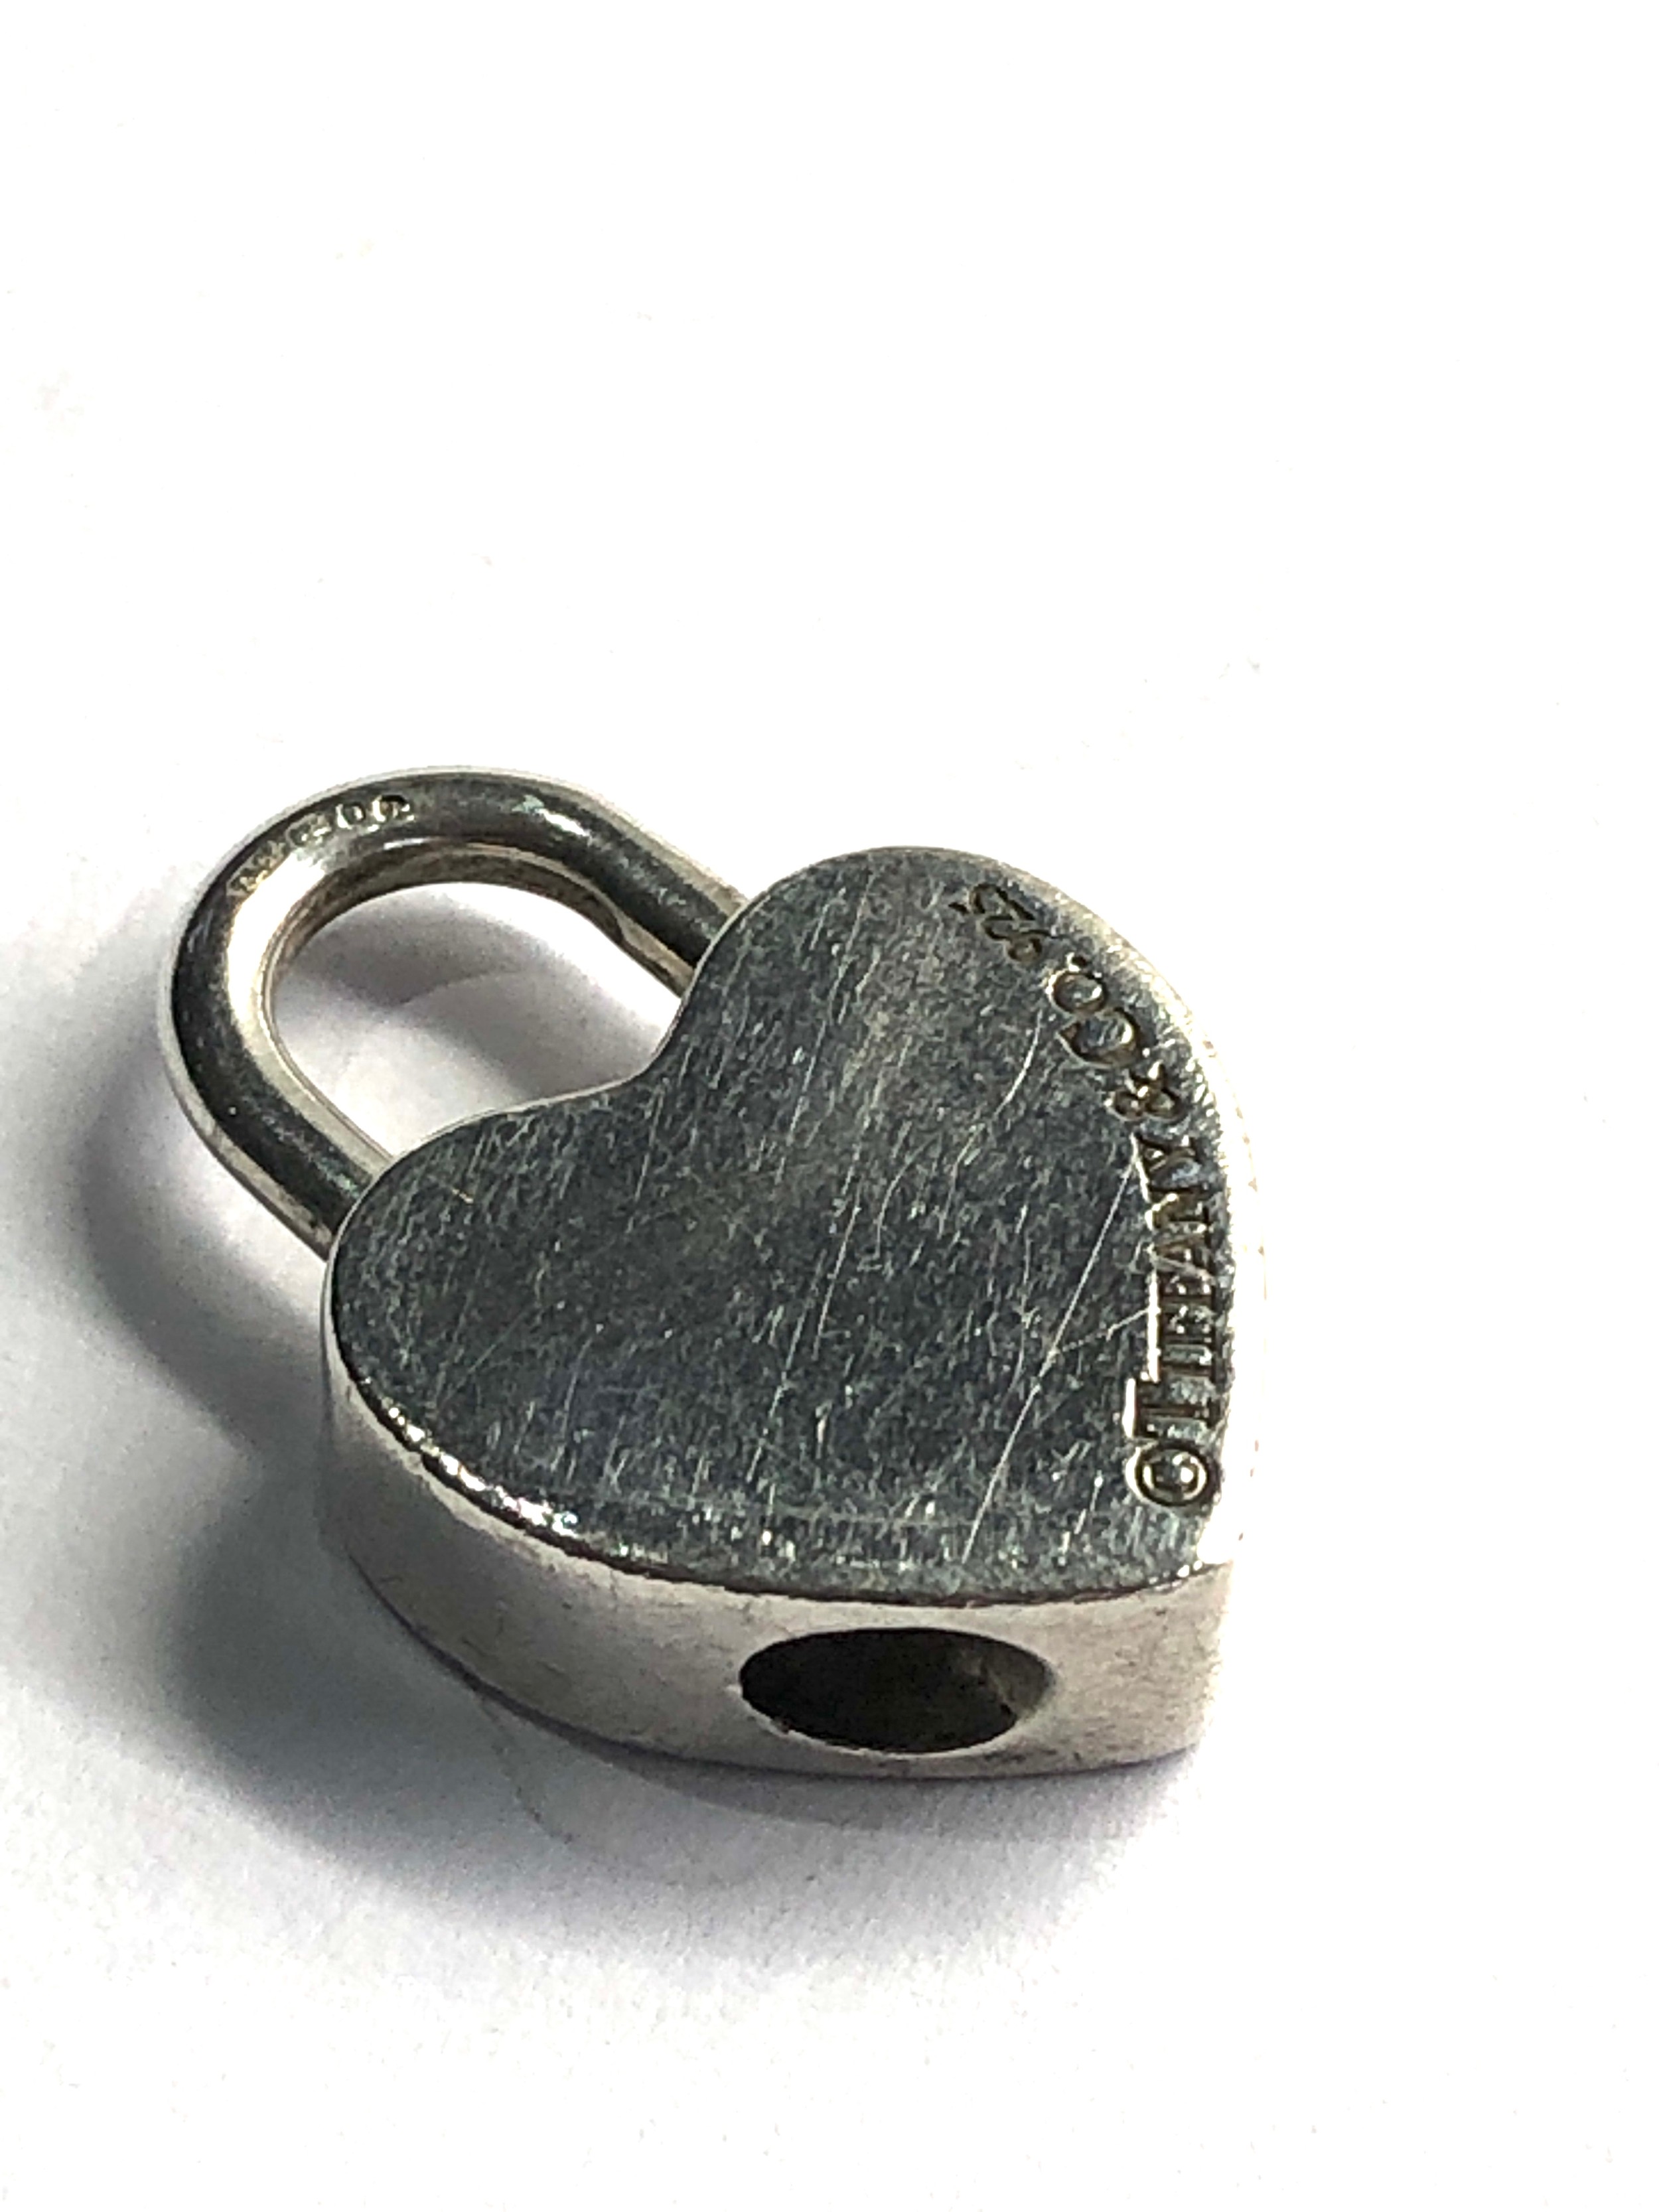 Tiffany & Co silver mum lock pendant padlock - Image 2 of 2